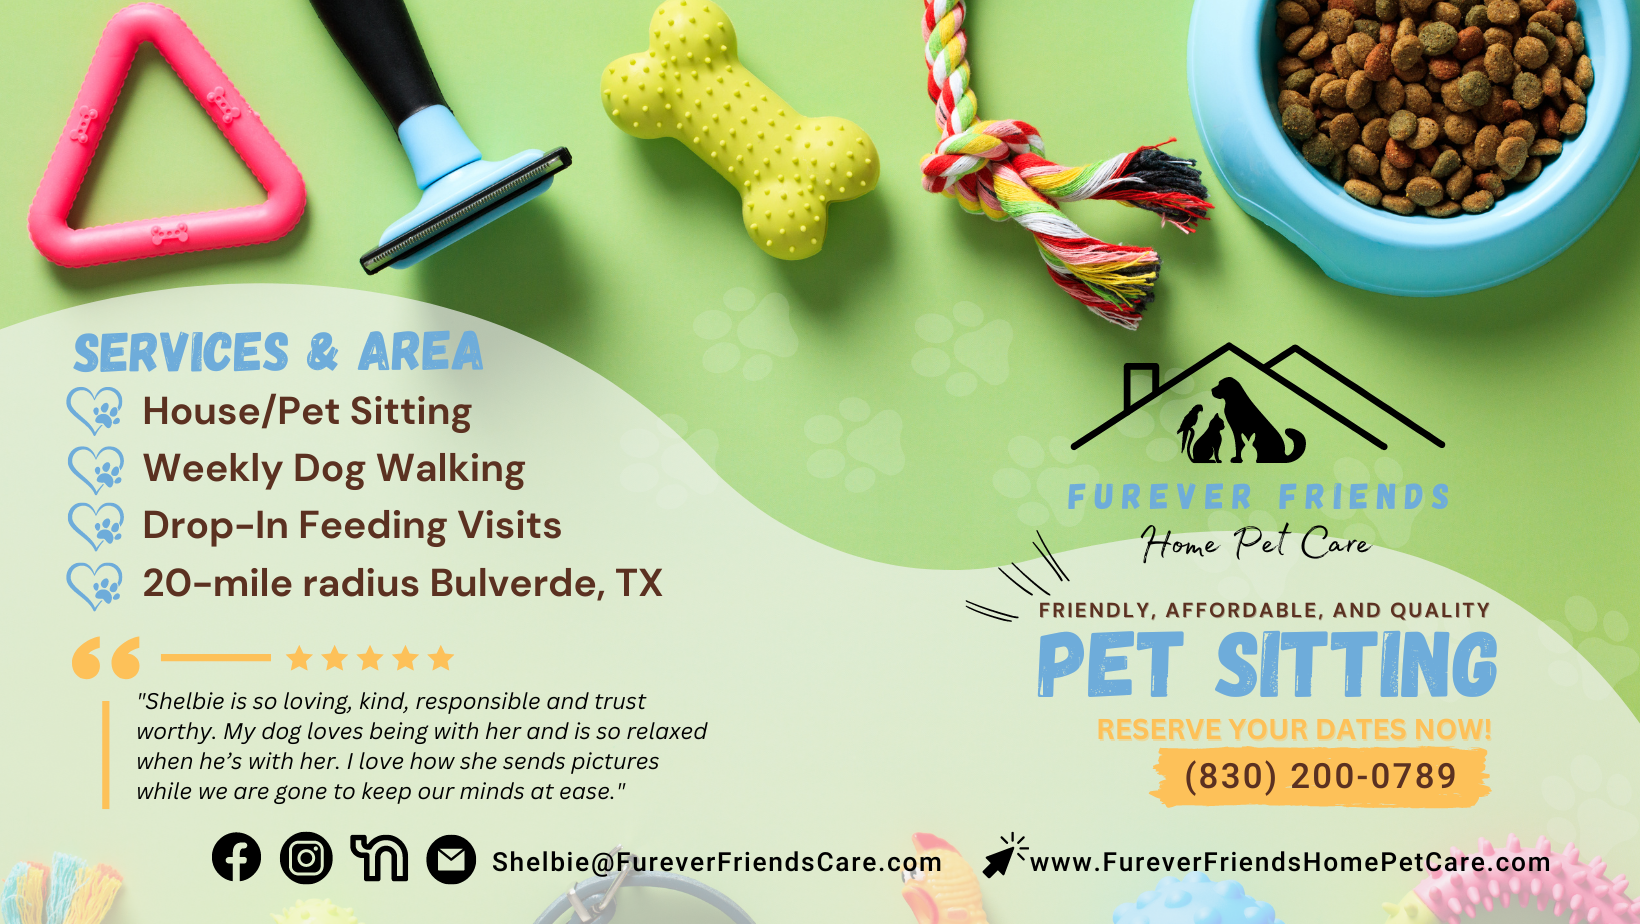 Furever Friends Home Pet Care